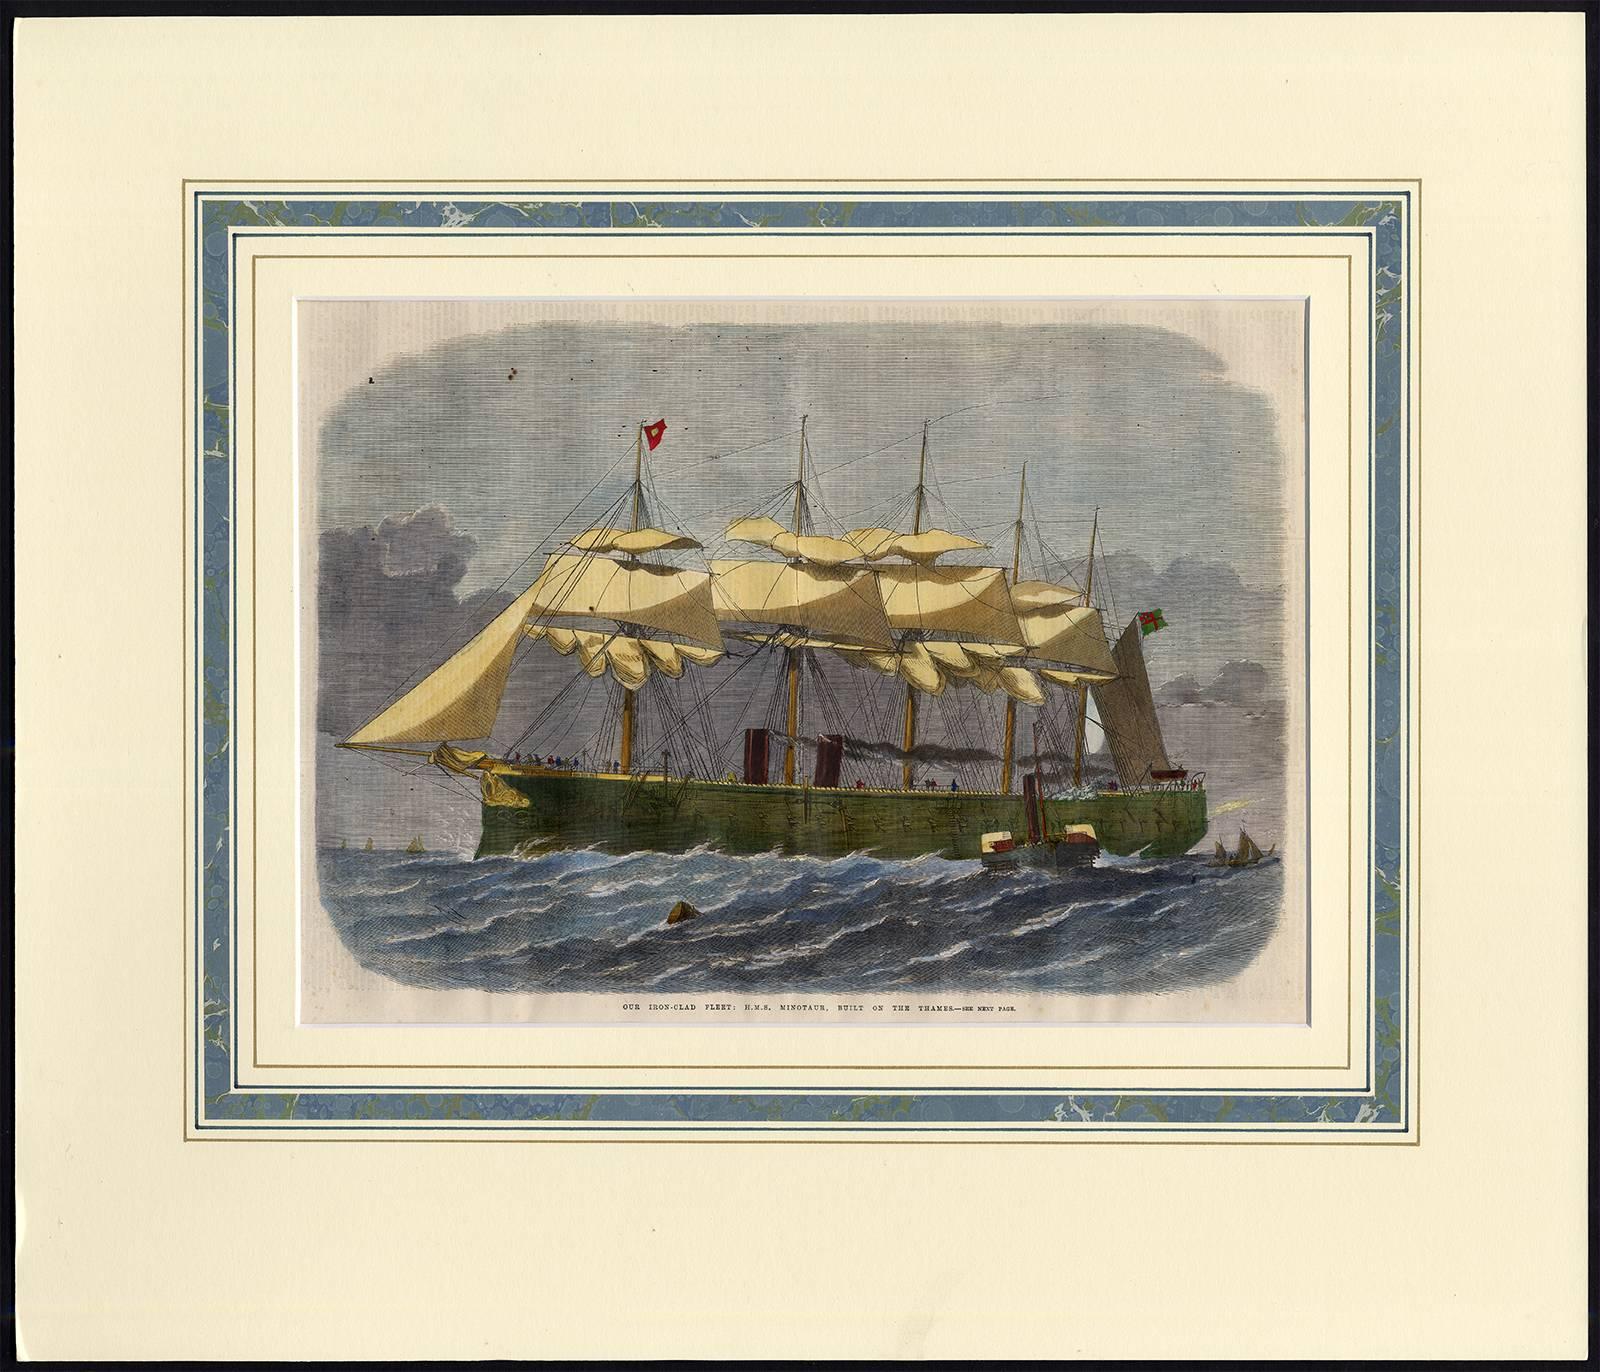 Unknown Figurative Print - Our Iron-Clad Fleet: H.M.S. Minotaur, built on the Thames.